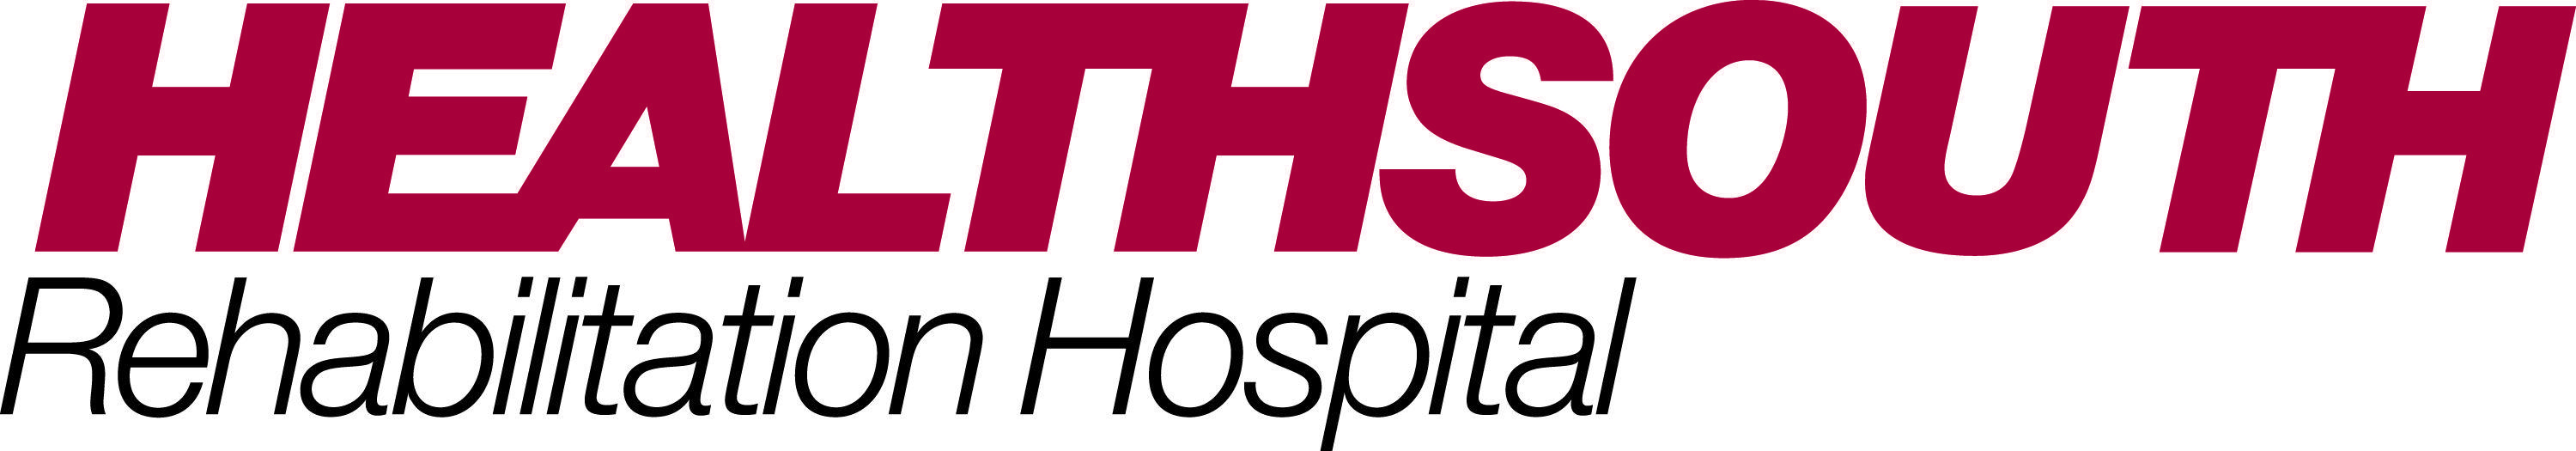 HealthSouth Logo - Sponsors